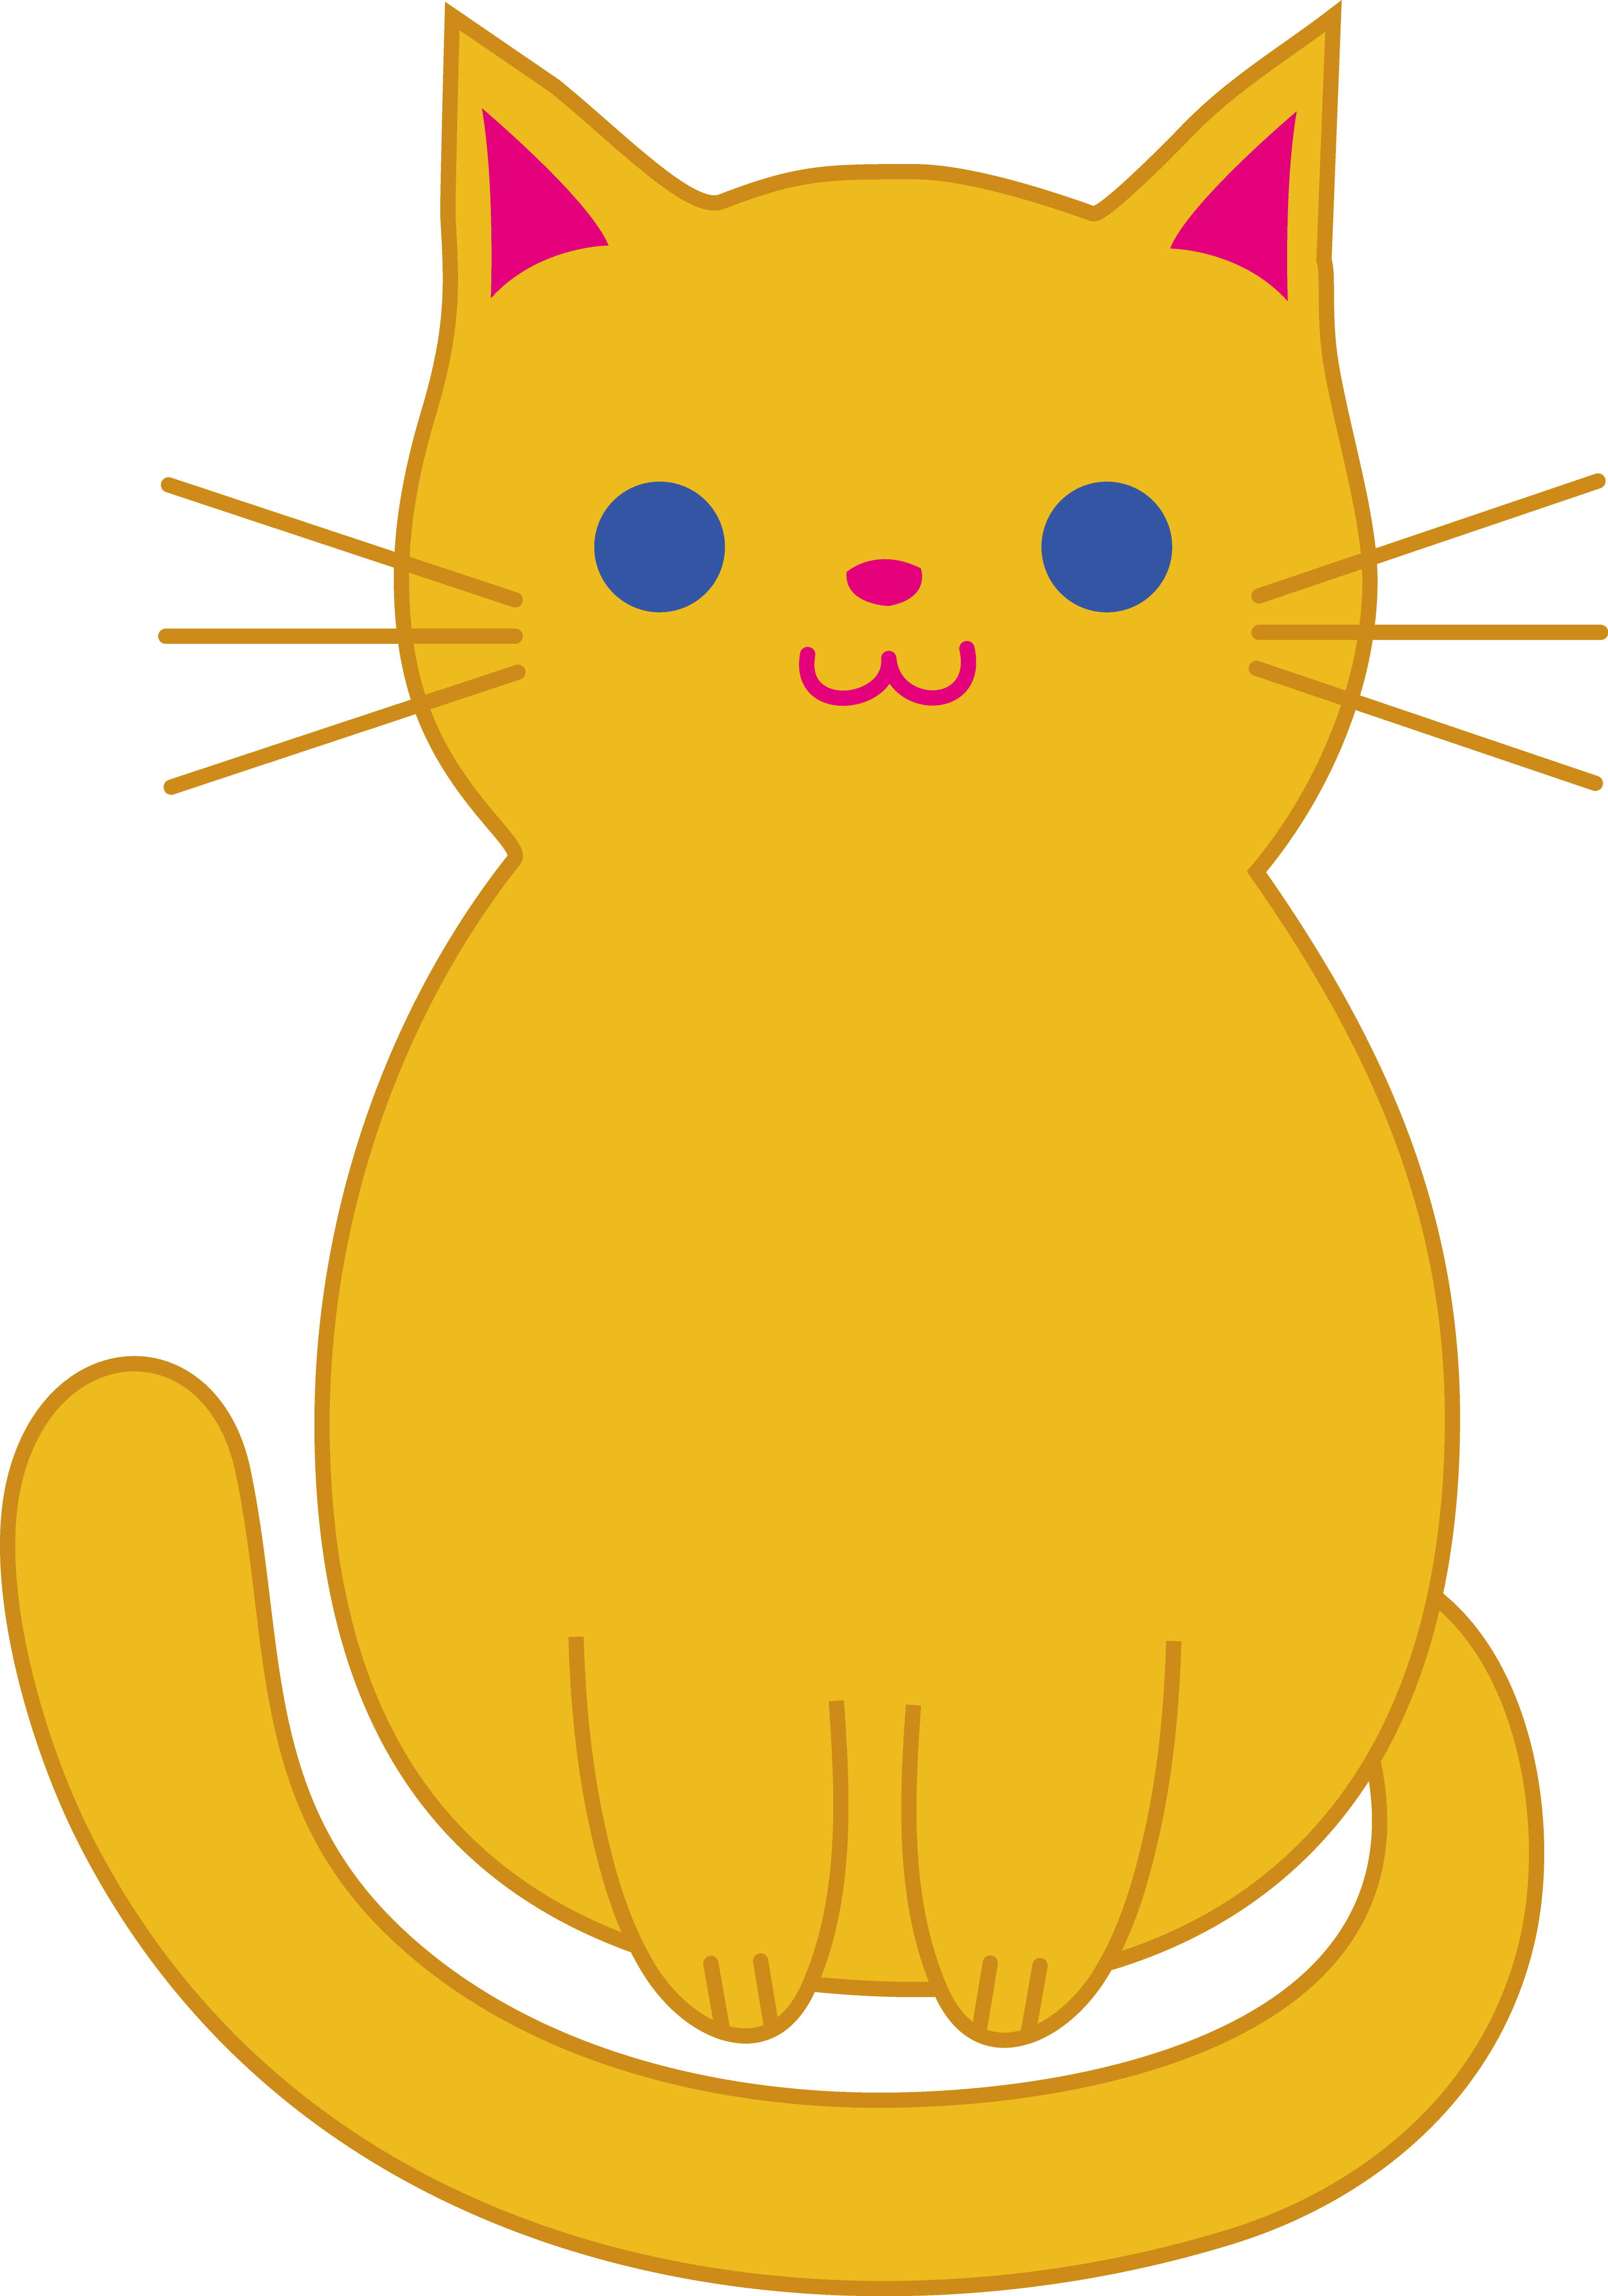 Cute Cat Cartoon Pictures : Cute Cat Cartoon Pictures | Boditewasuch